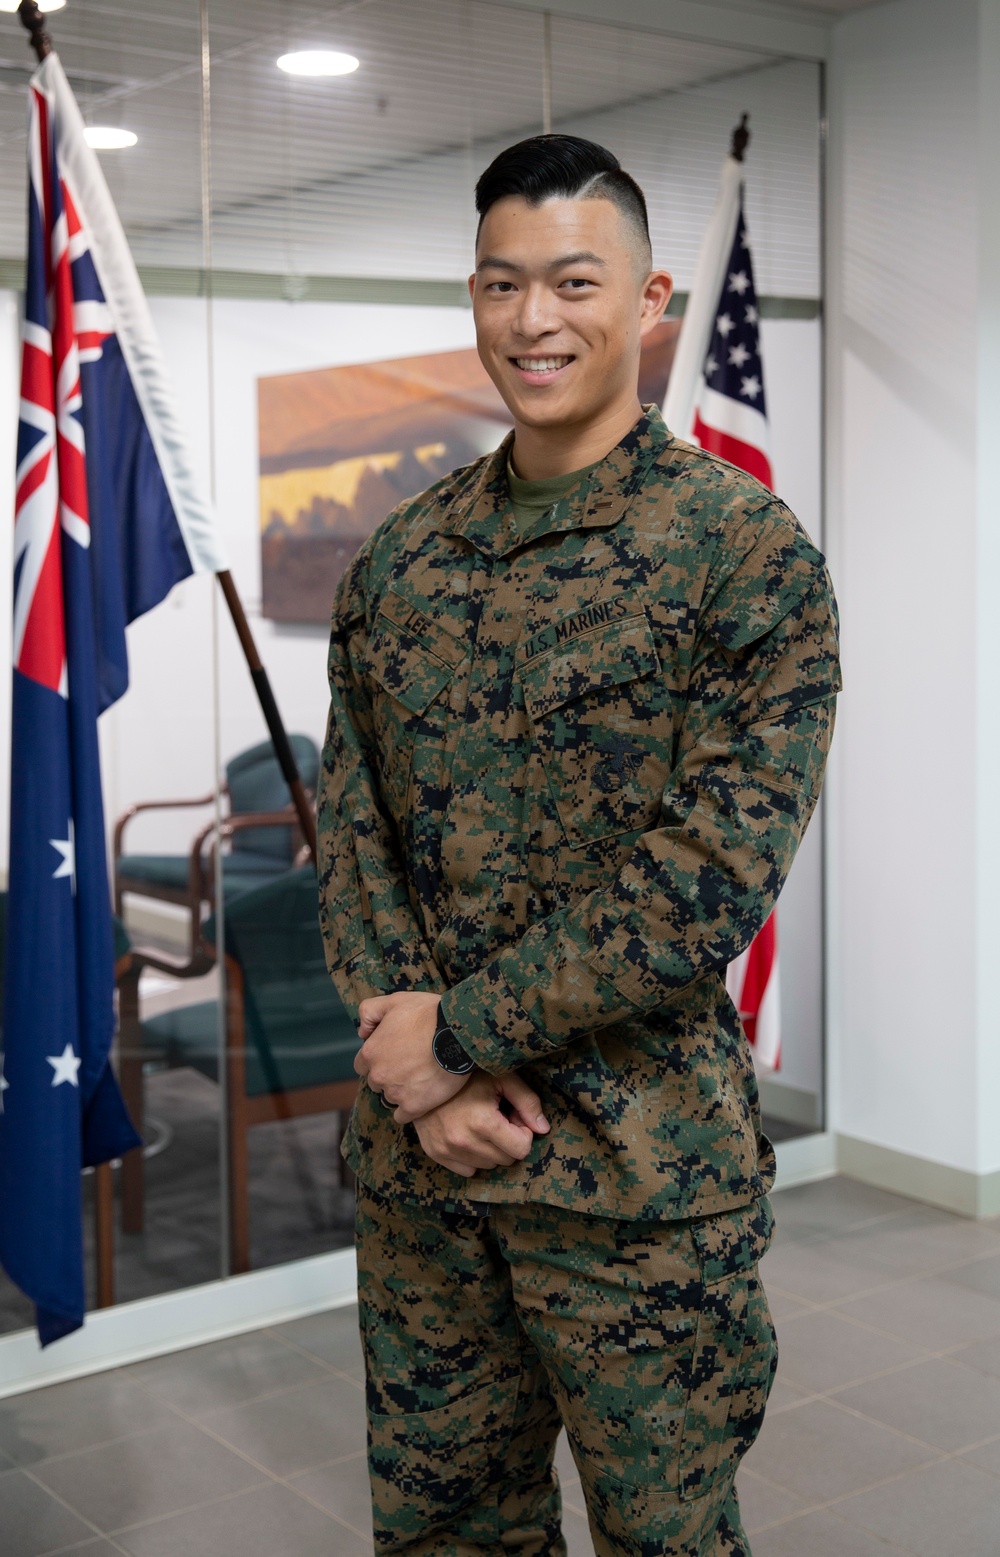 New Jersey native, U.S. Marine deploys to Australia